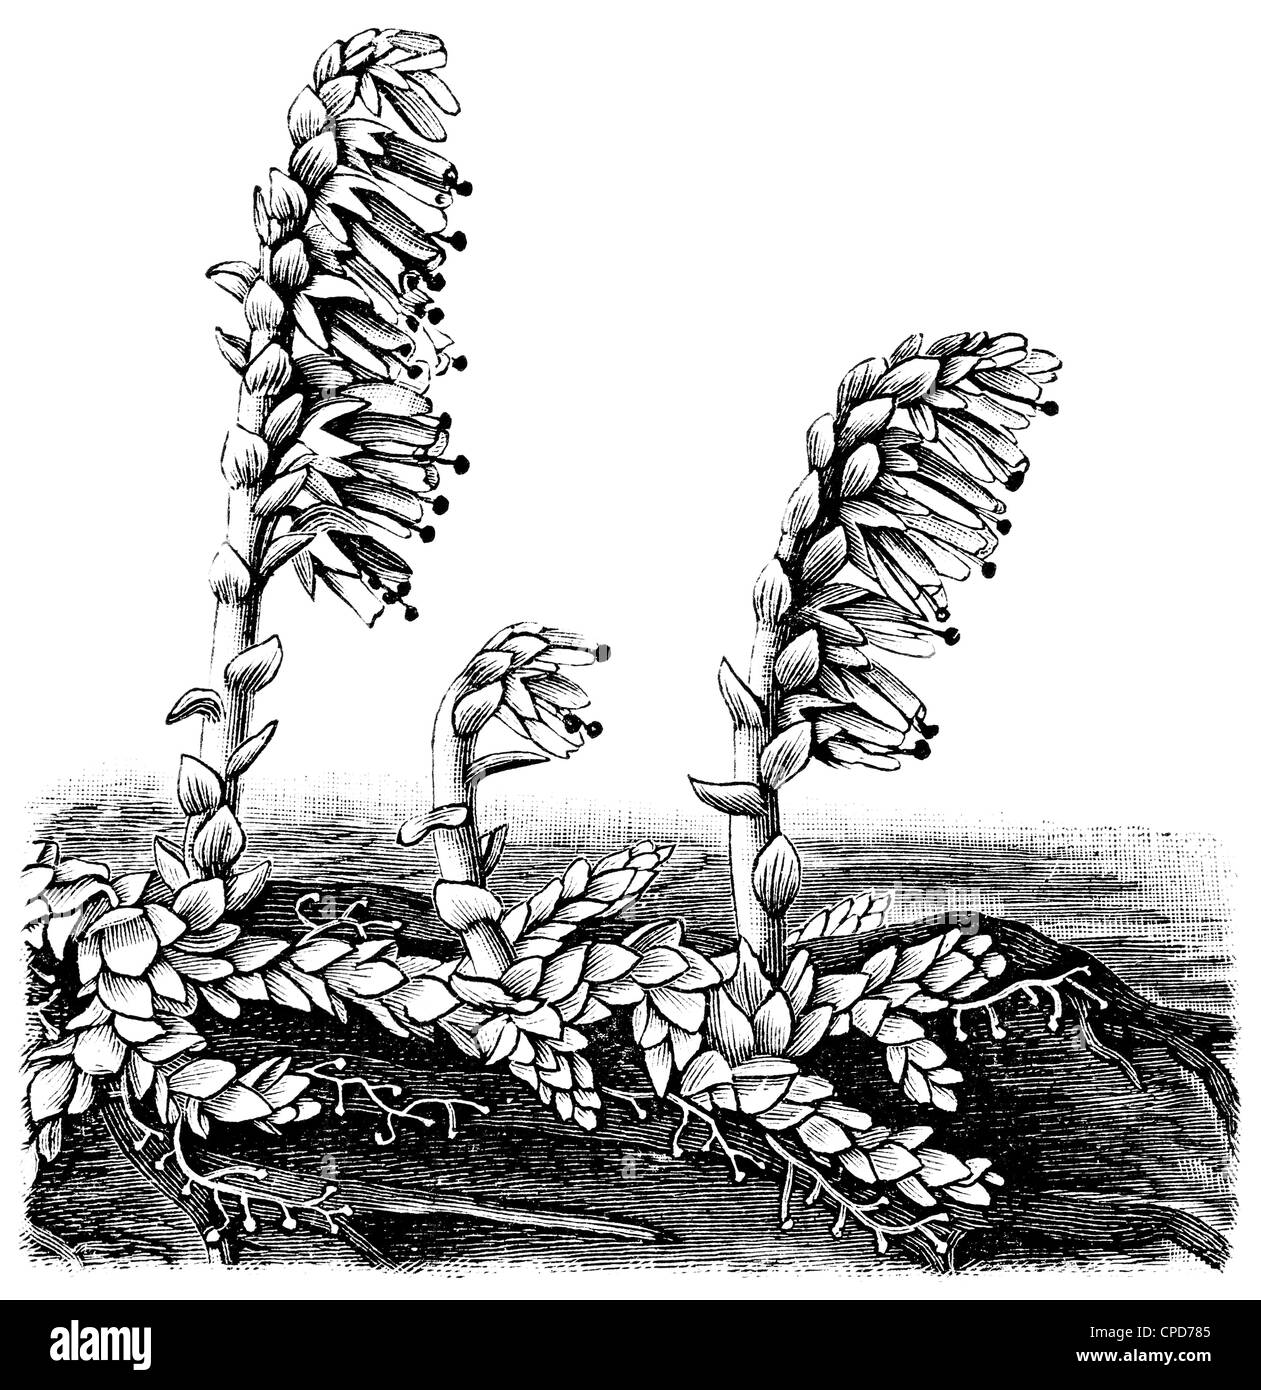 Common Toothwort (Lathraea squamaria). Publication of the book 'Meyers Konversations-Lexikon', Volume 7, Leipzig, Germany, 1910 Stock Photo